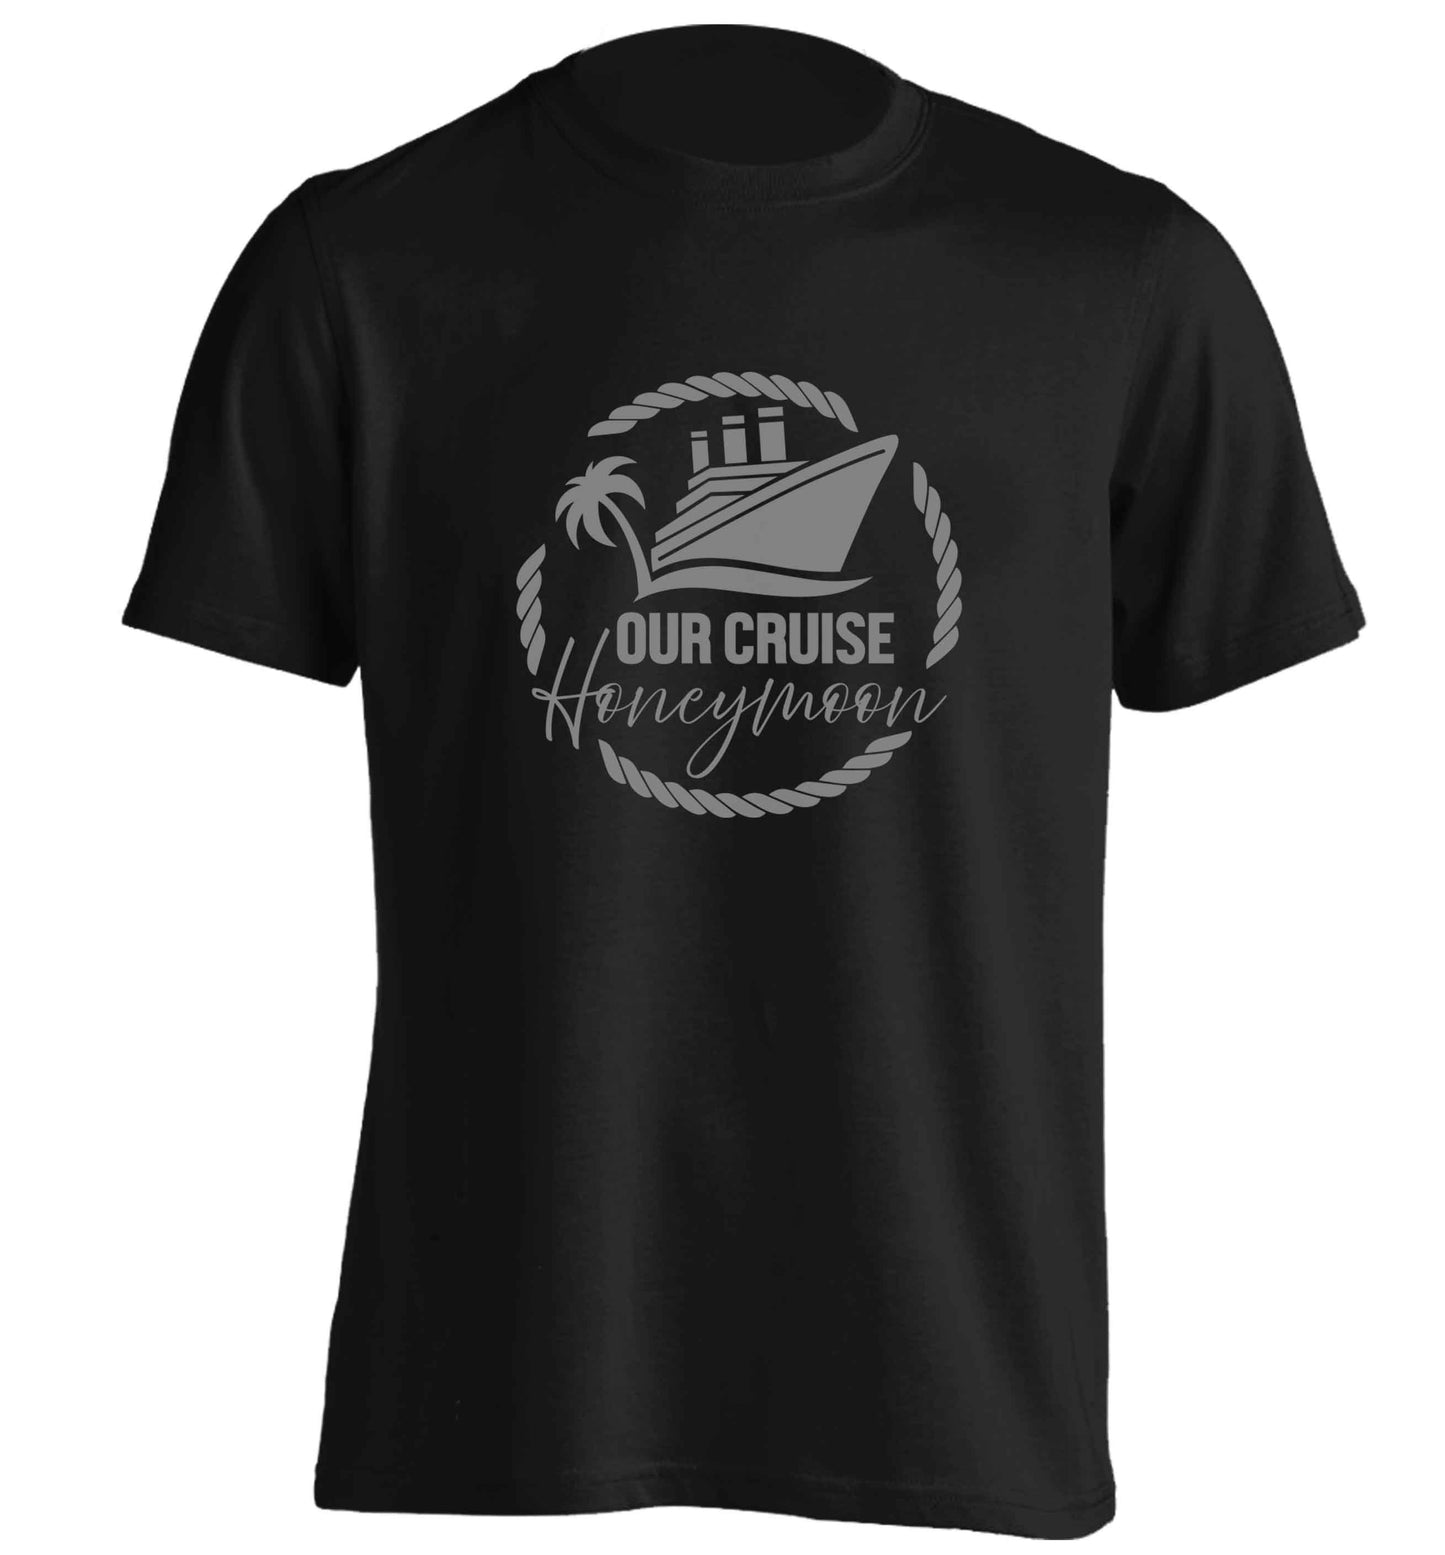 Our cruise honeymoon adults unisex black Tshirt 2XL